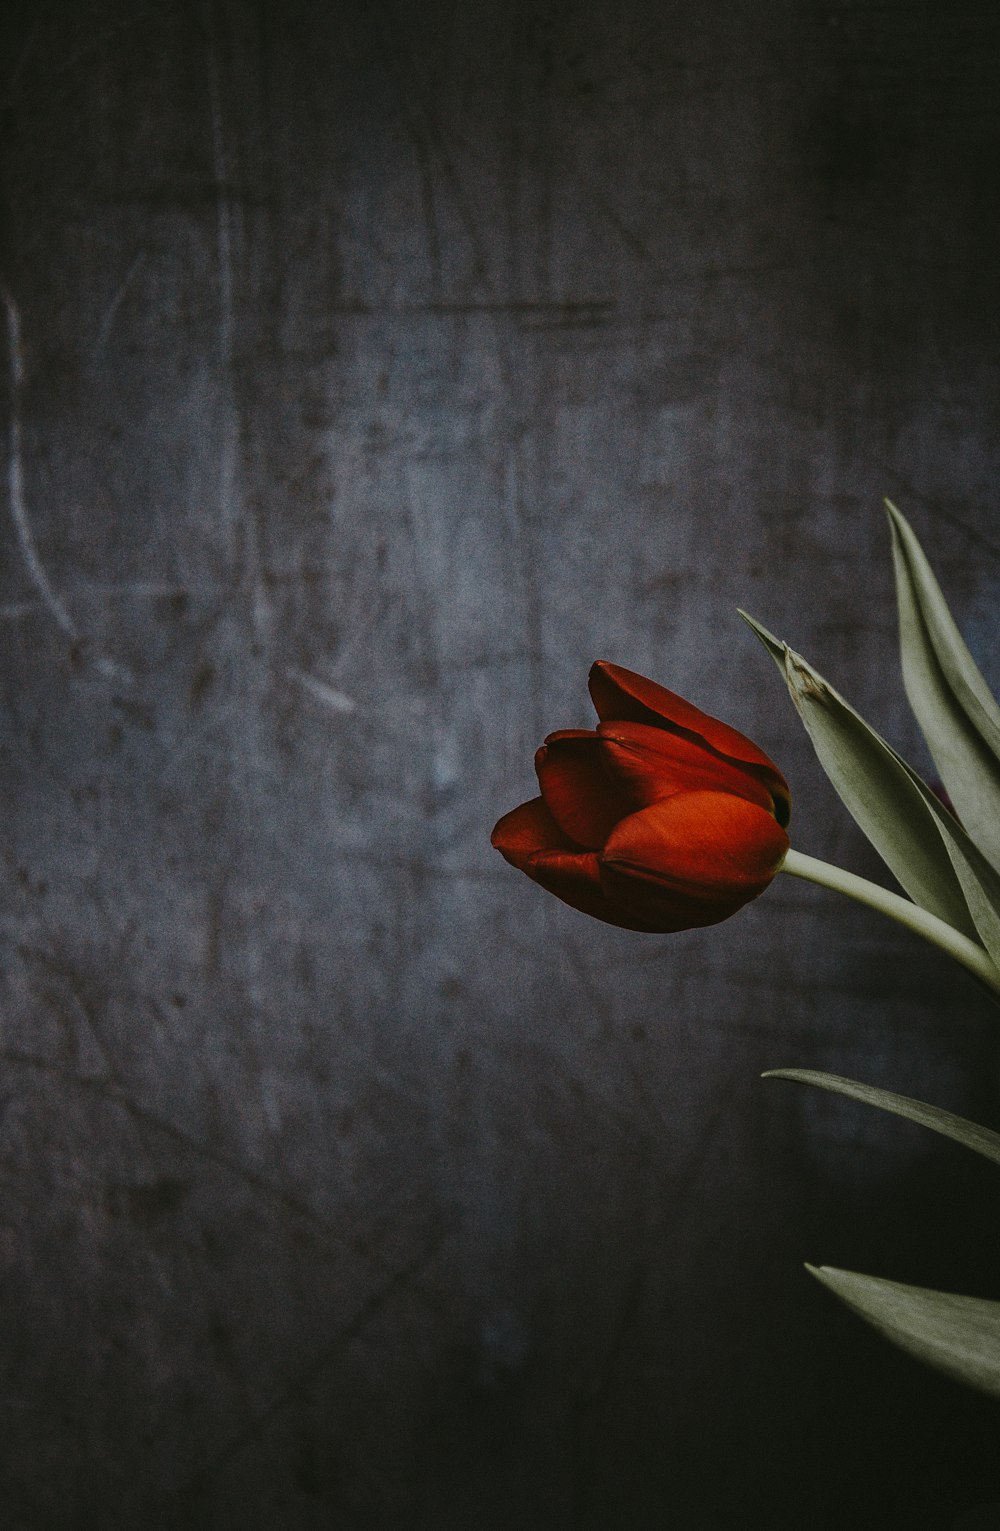 Foto de primer plano de flor de tulipán rojo